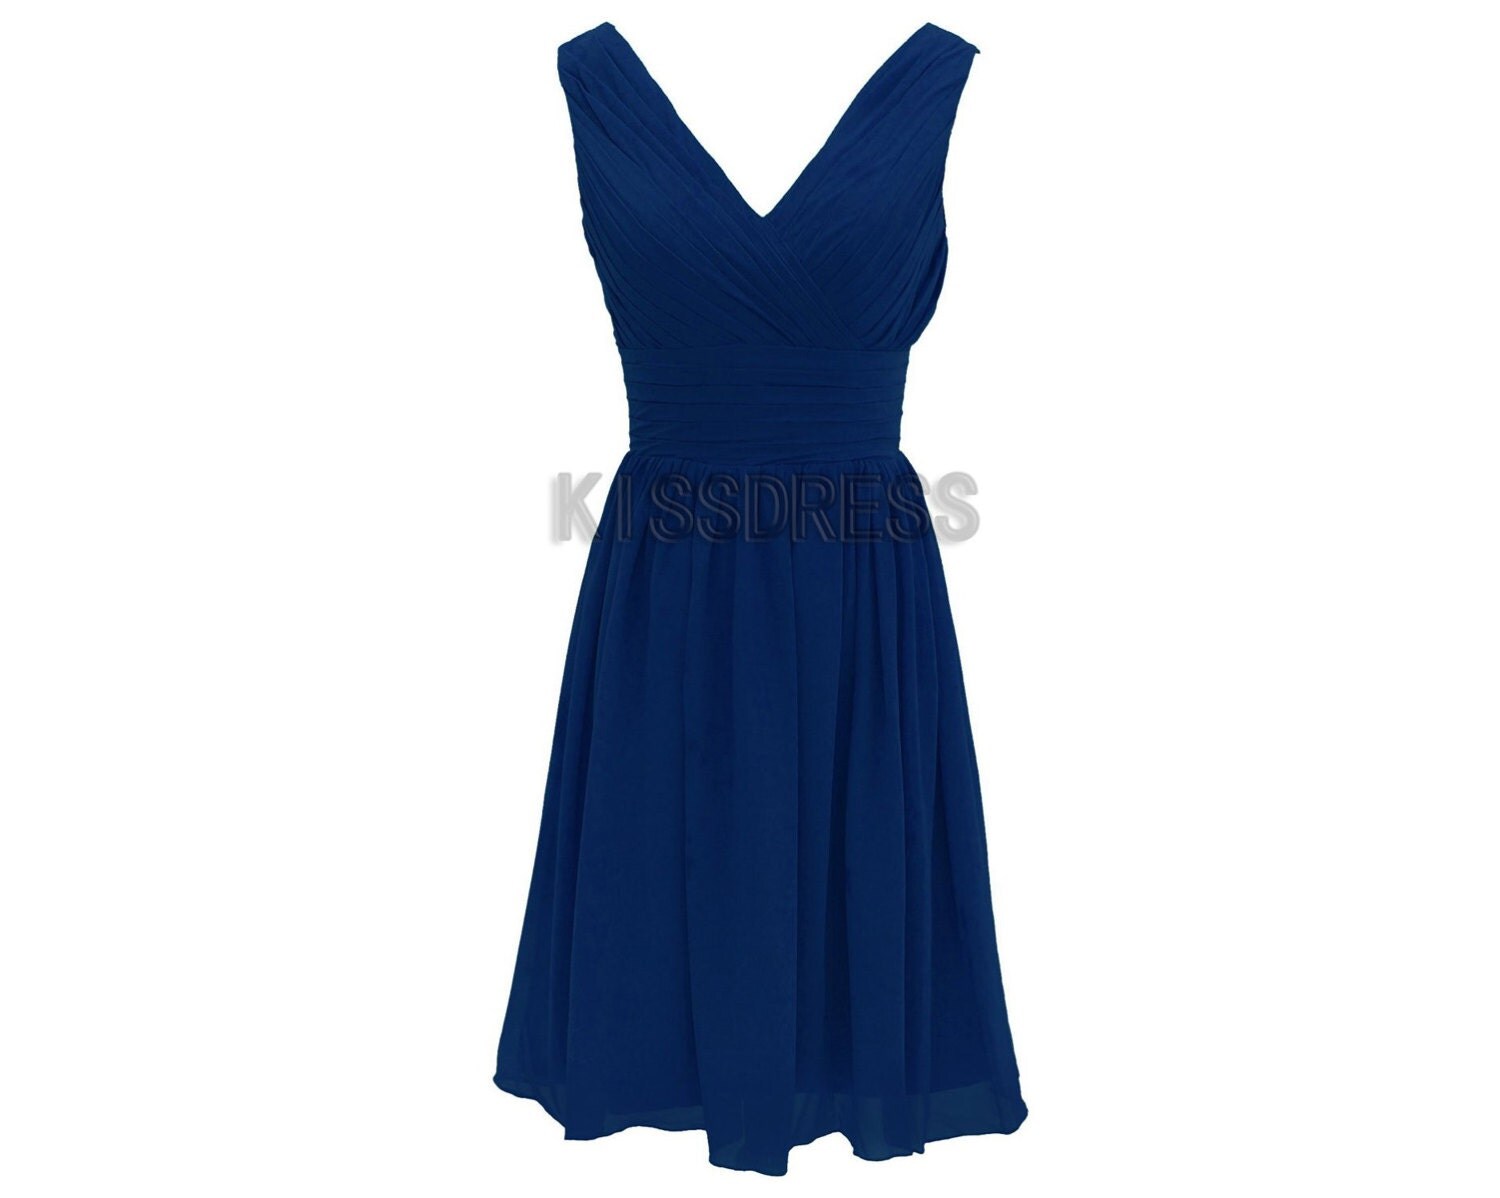 Navy Blue Short Bridesmaid Prom Dress 2014/Cheap Prom by kissdress